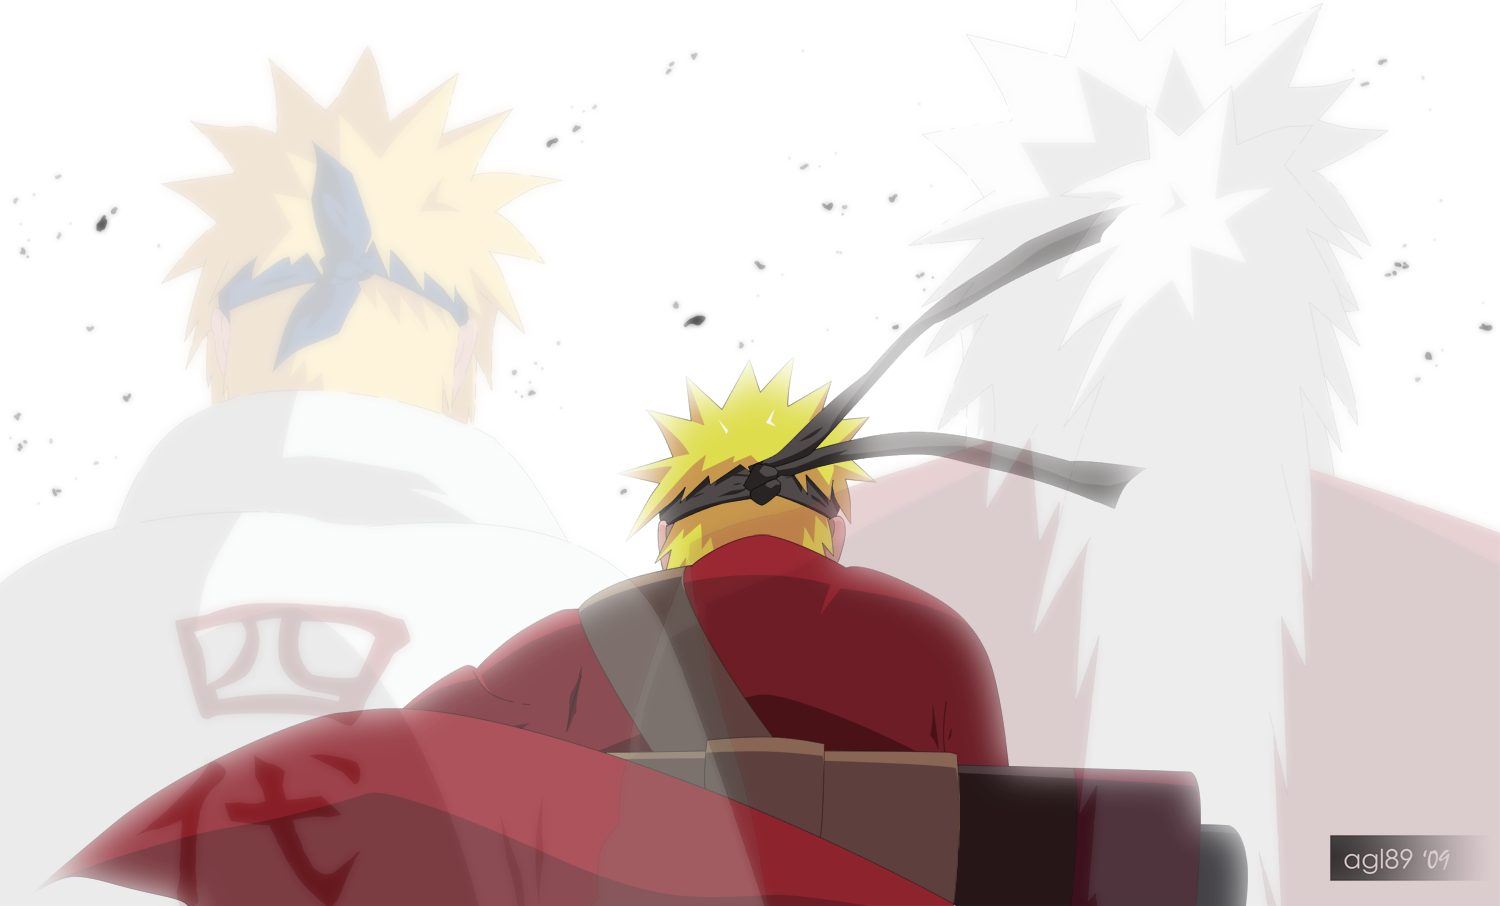 Naruto: Becoming a Hero Wallpaper Background Image. View